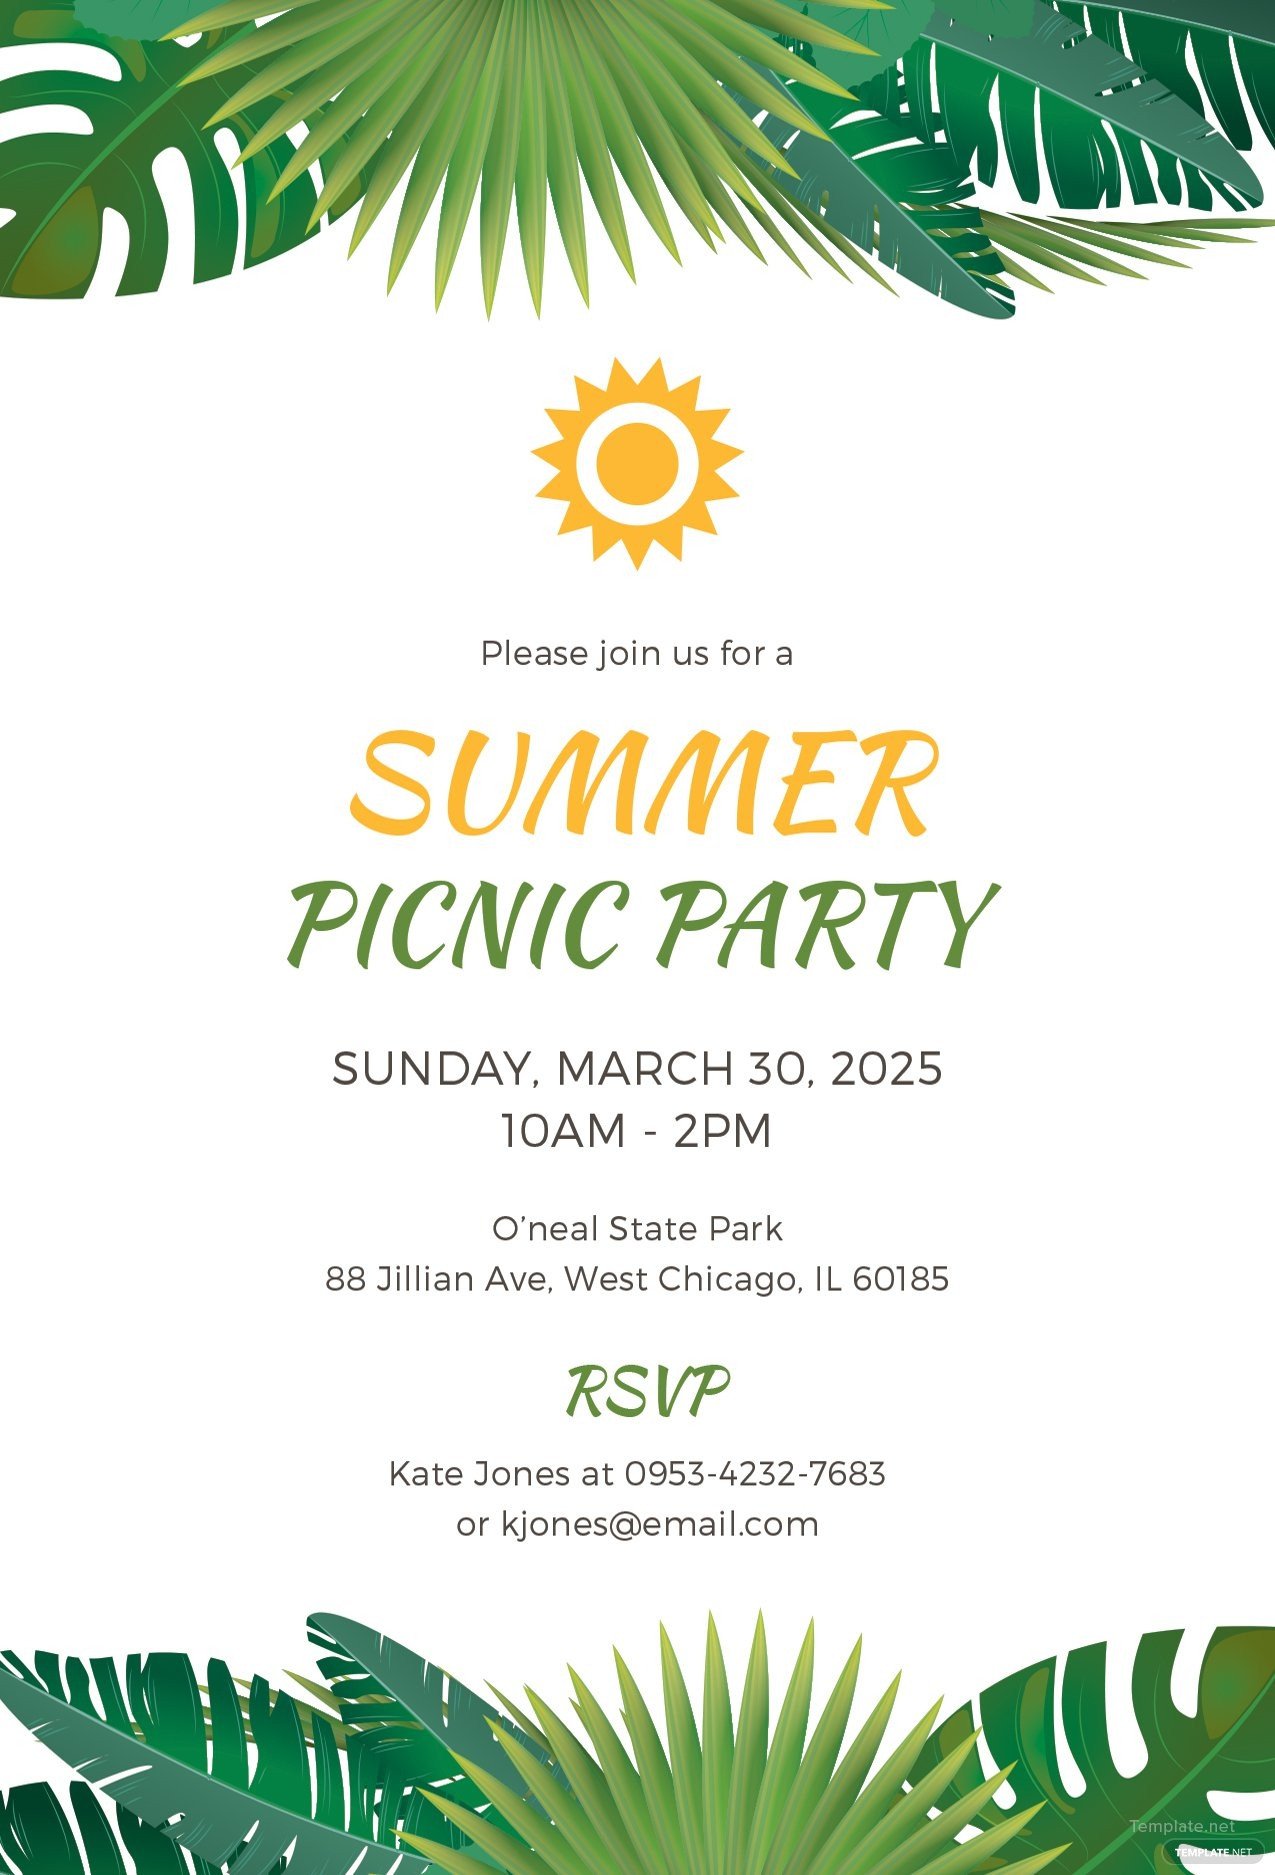 Free Summer Picnic Party Invitation Template in Microsoft